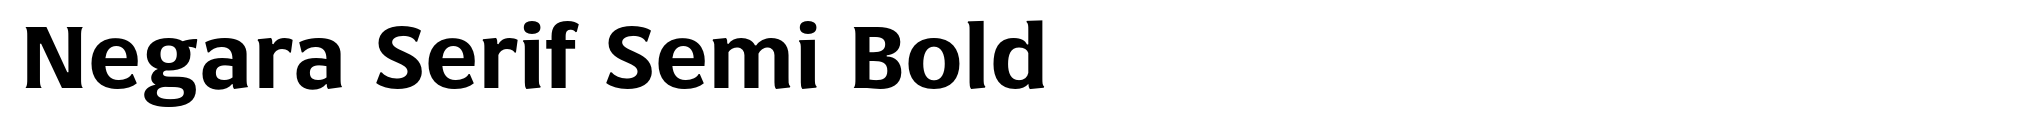 Negara Serif Semi Bold image